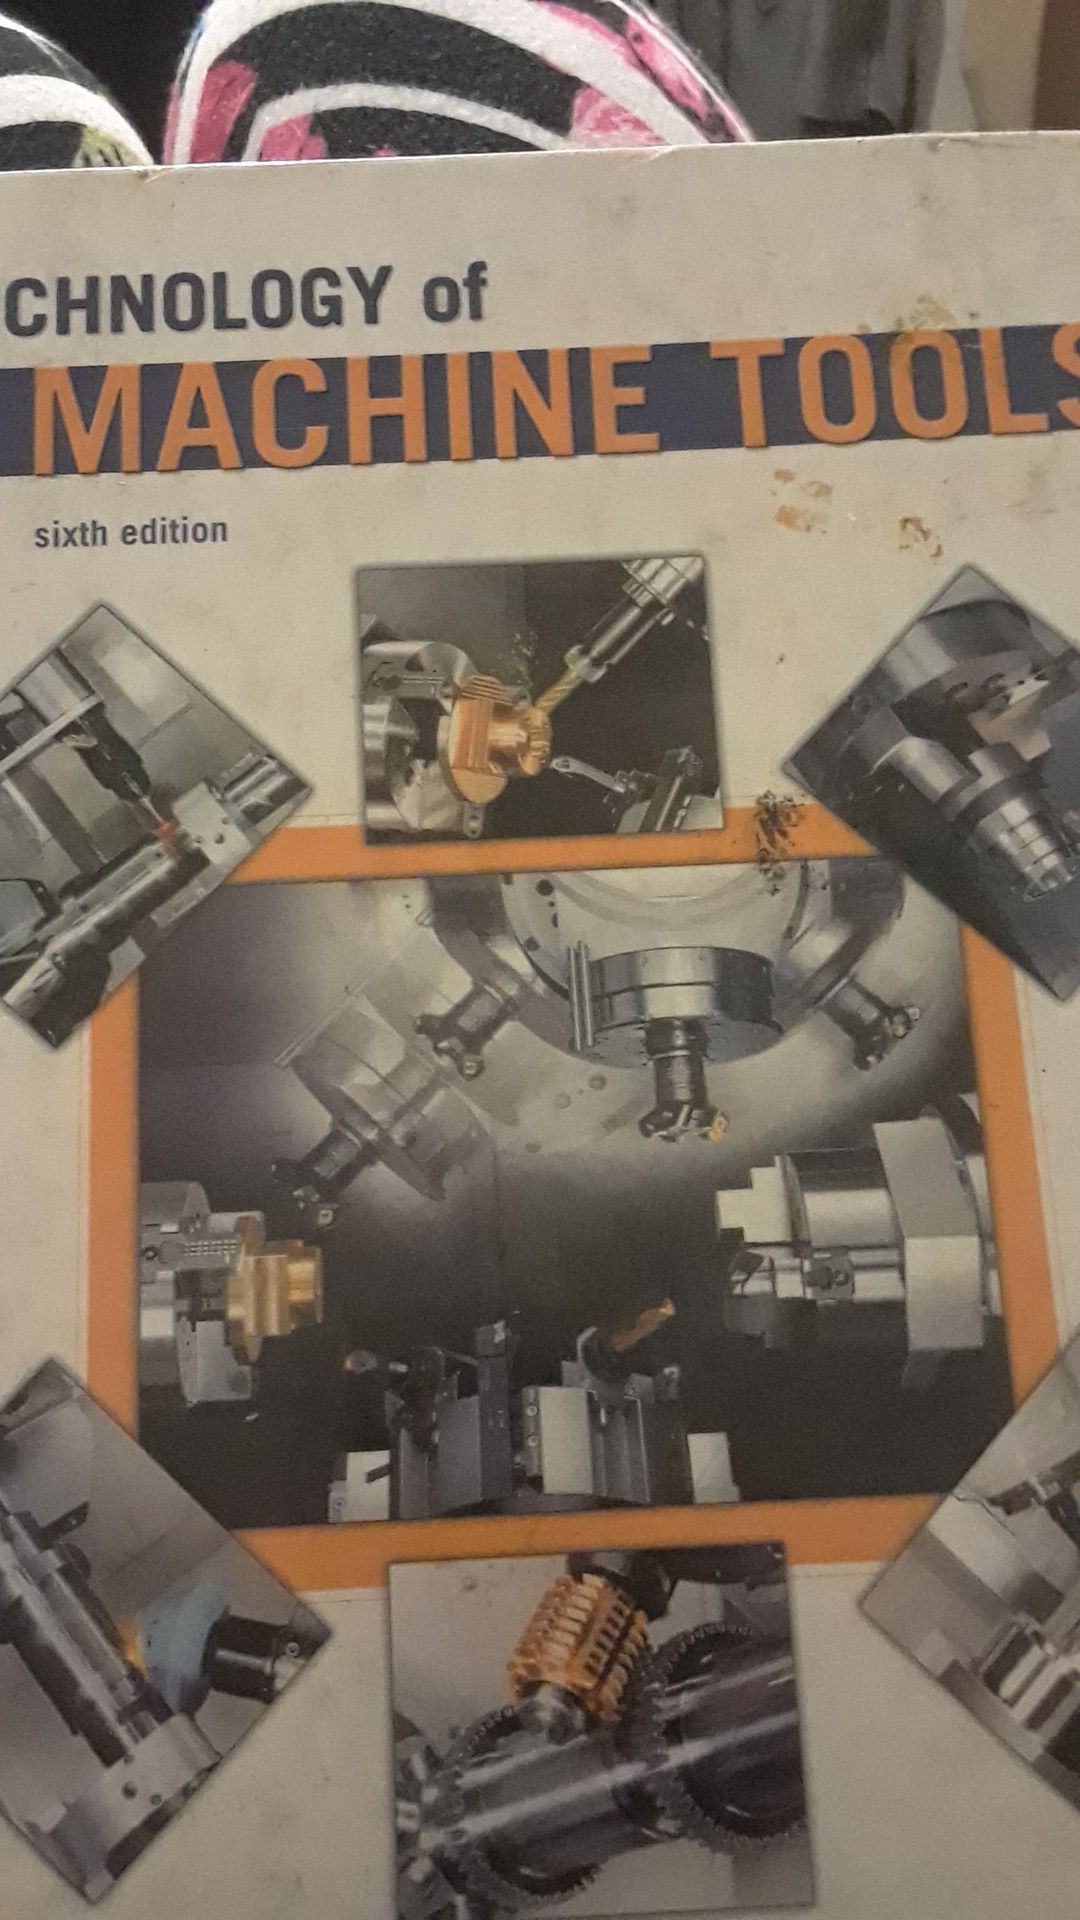 CNC book technology of machine tools